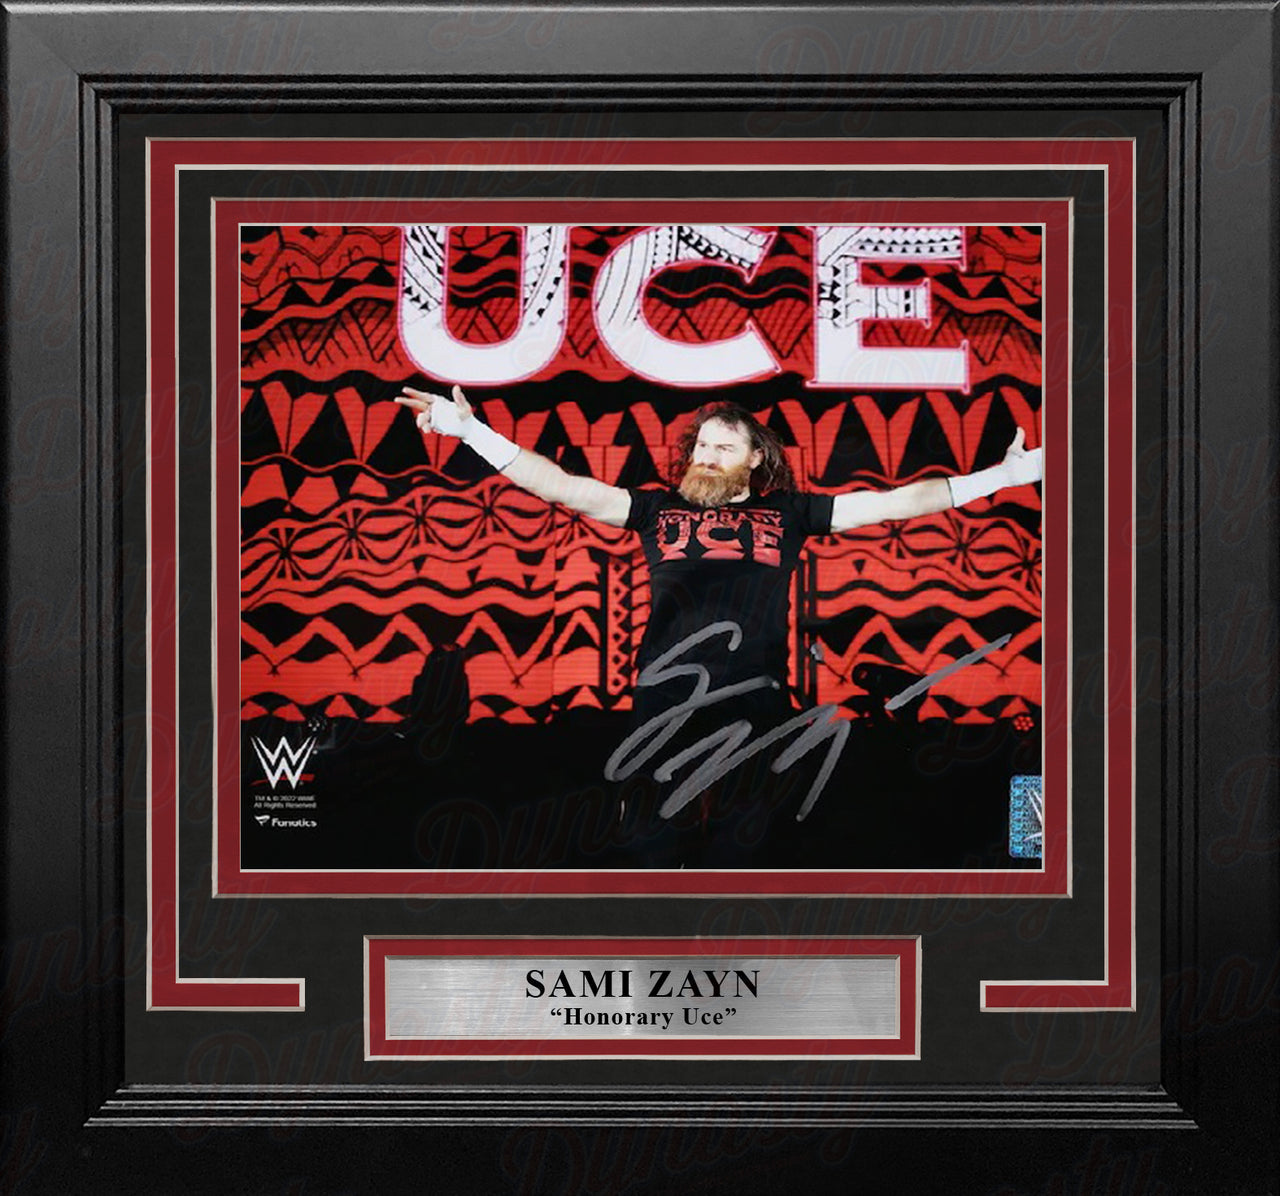 Sami Zayn Honorary Uce Entrance Autographed WWE Wrestling 8" x 10" Framed Photo - Dynasty Sports & Framing 